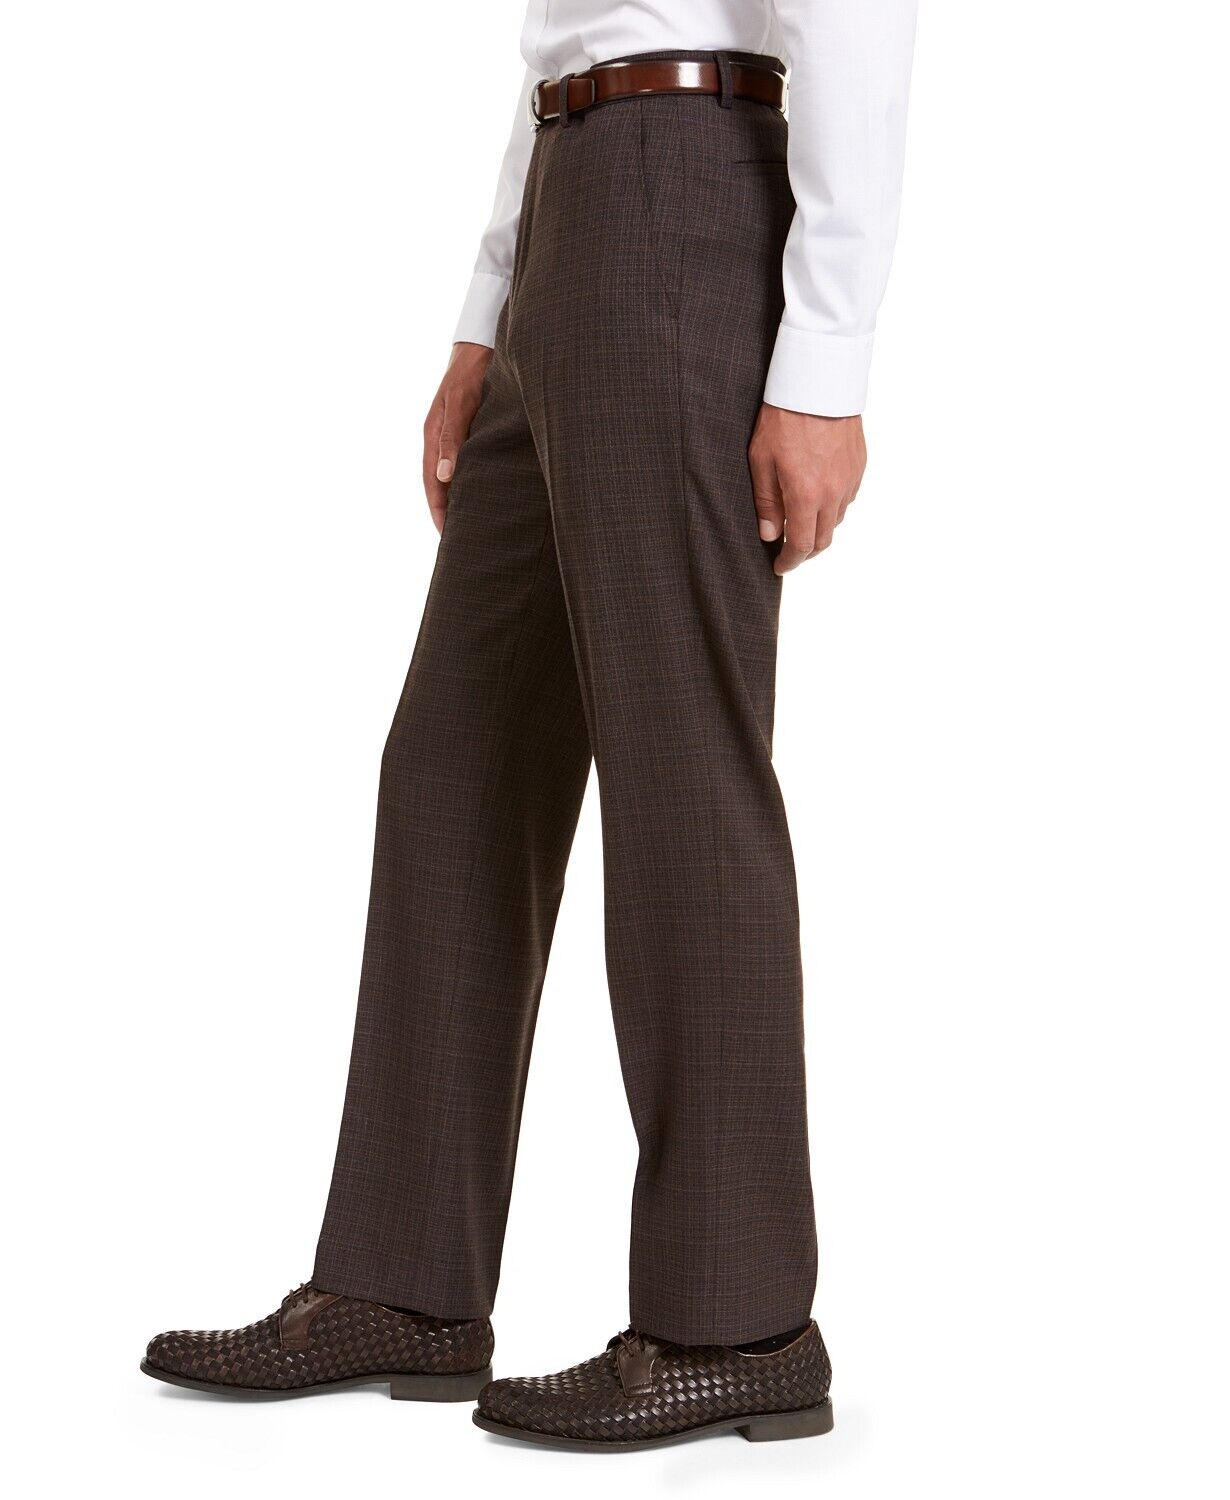 Sean John Men's Classic-Fit Stretch Brown Neat Dress Pants 40 x 30 Flat Pant